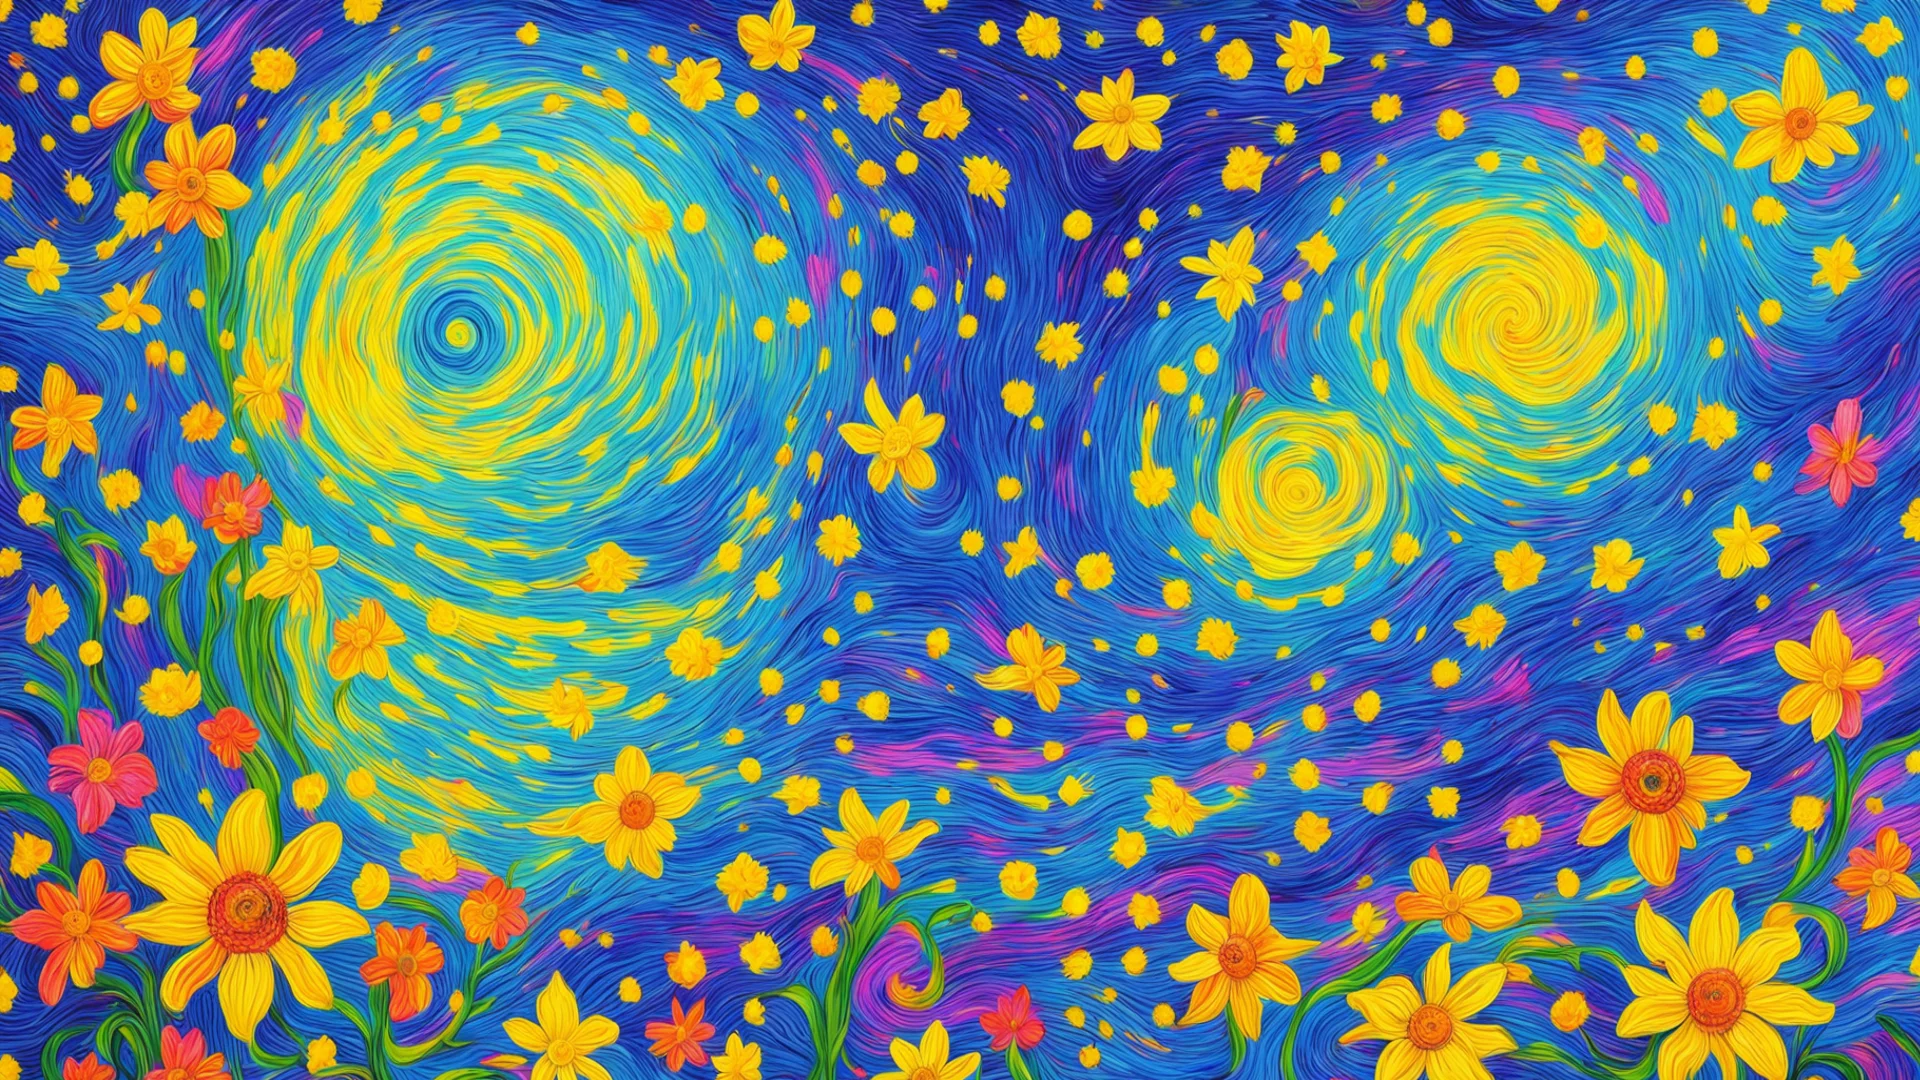 starry night van gogh beautiful colors swirl flowers wide